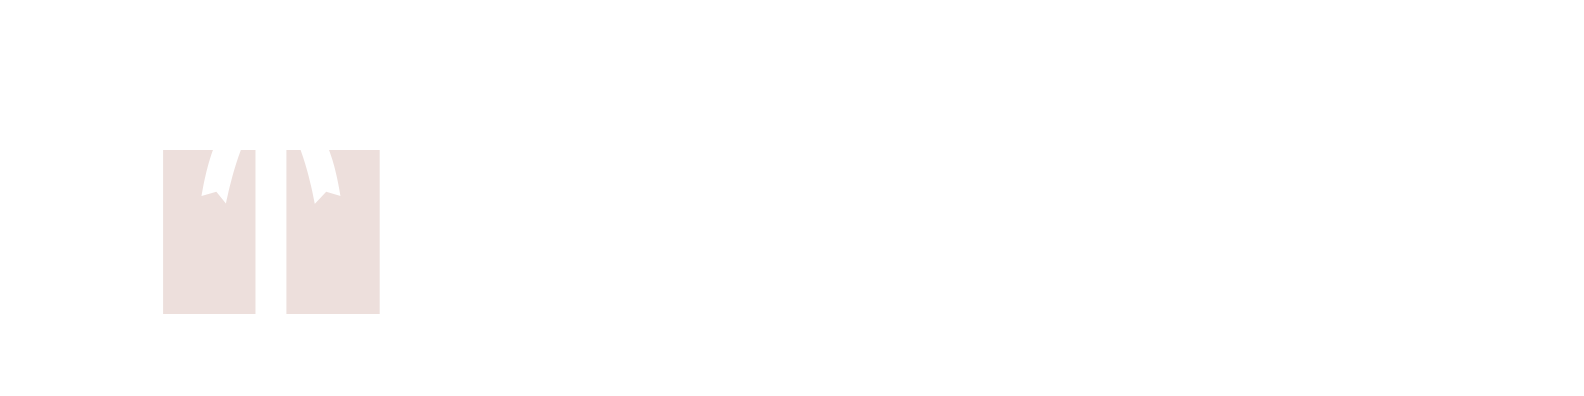 gift basket deluxe logo svg